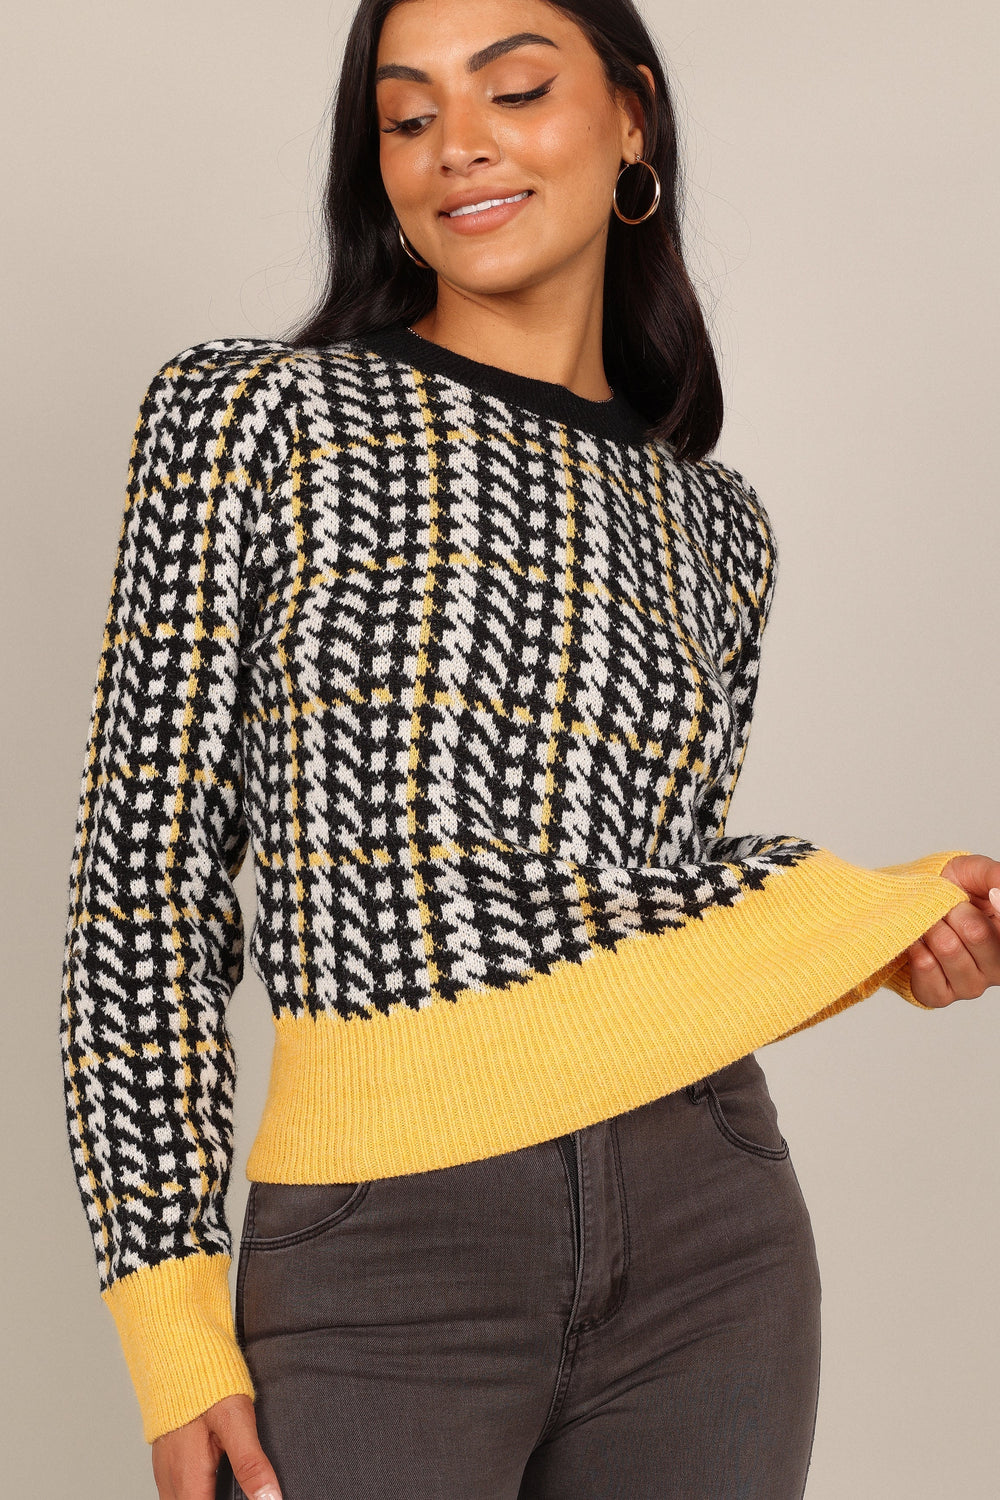 Petal and Pup USA Knitwear Tina Houndstooth Knit Sweater - Black/Mustard